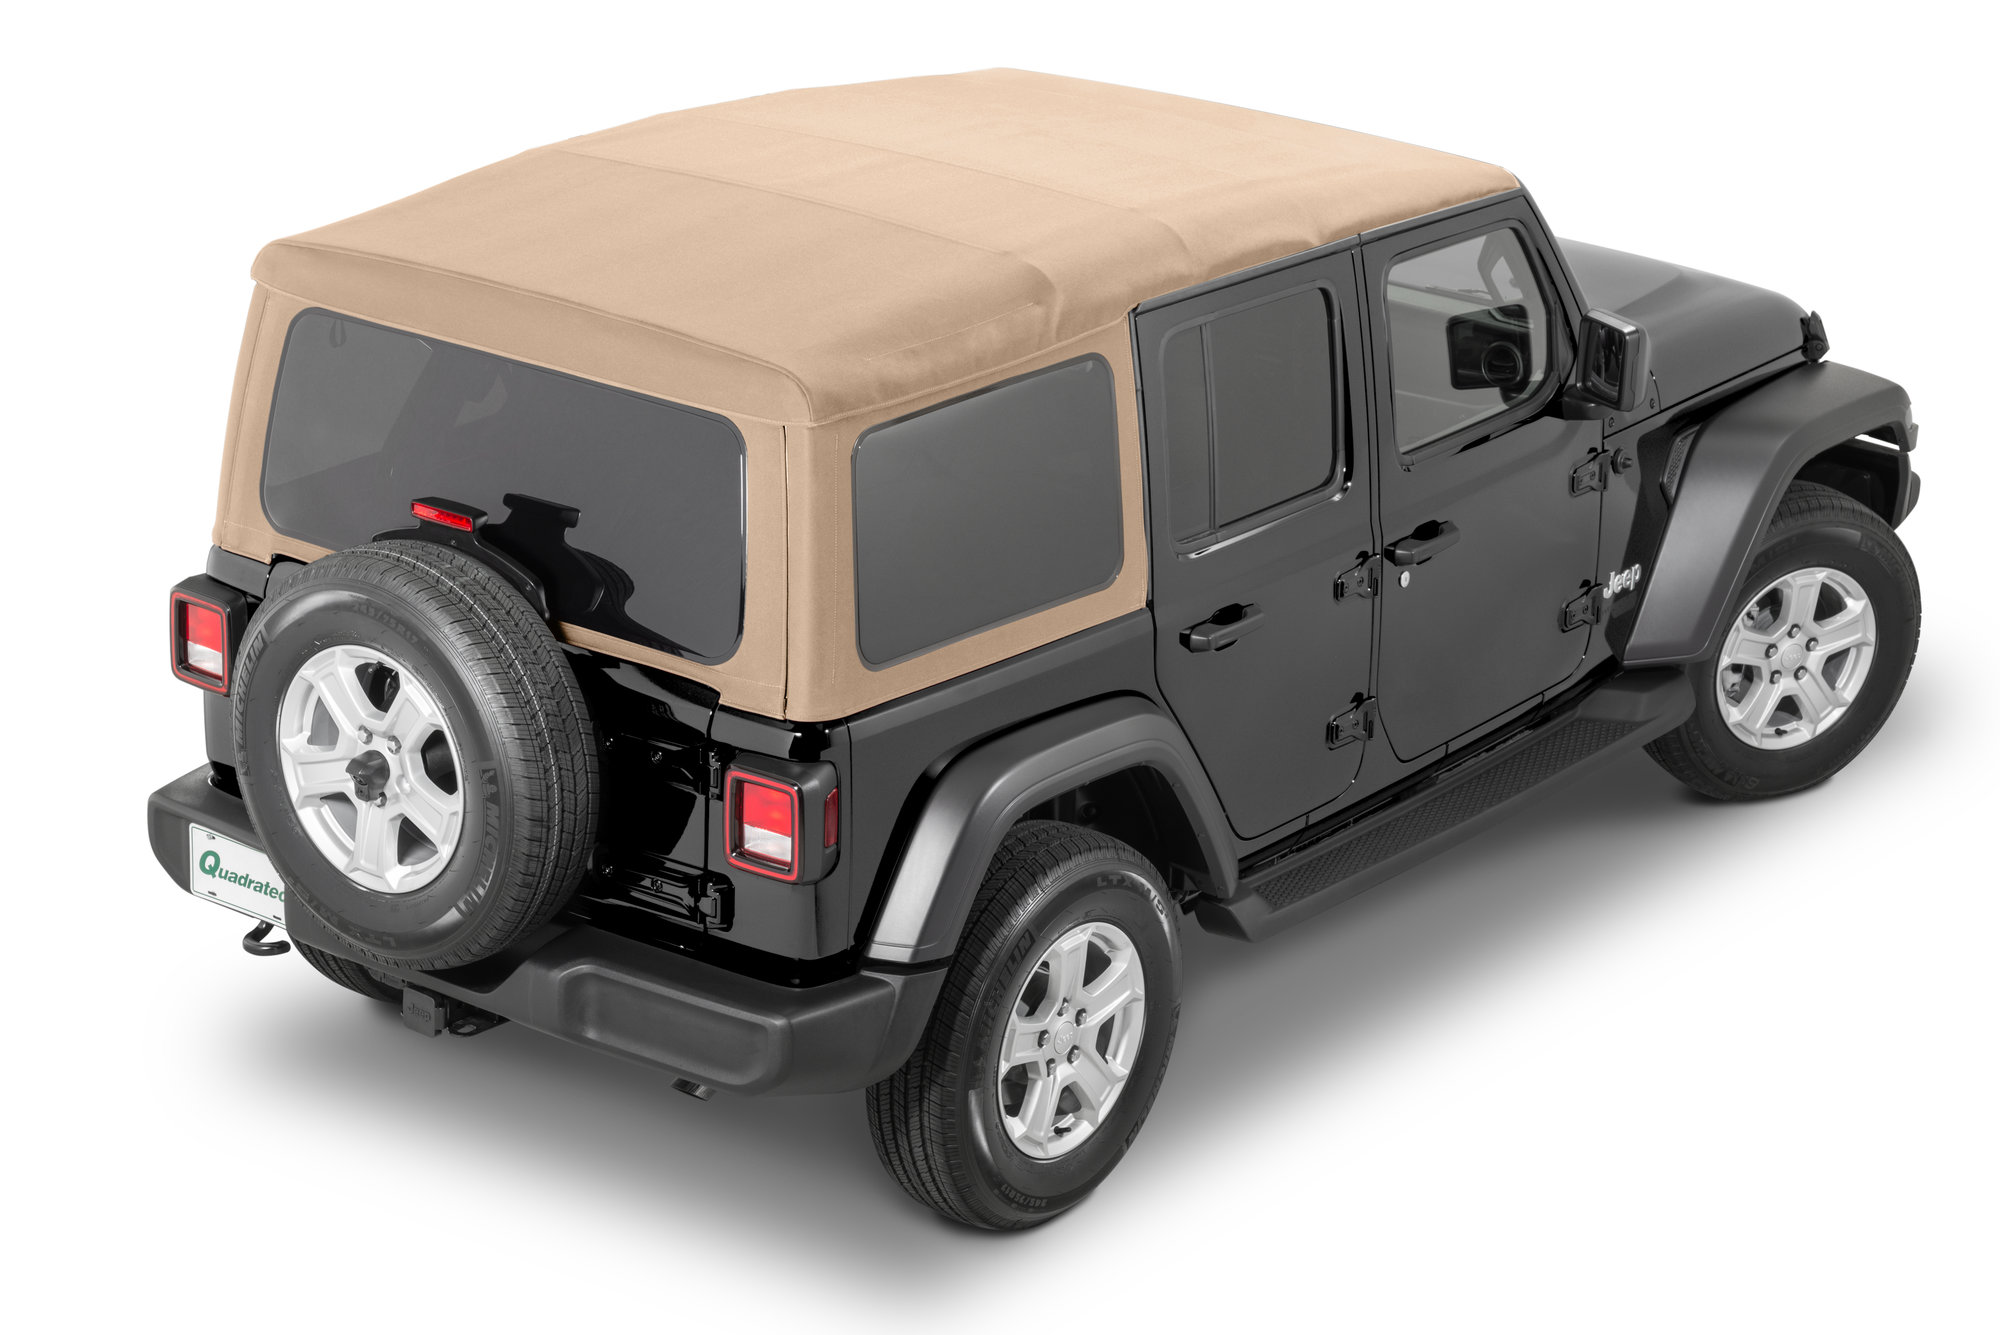 JL soft top options | Jeep Wrangler Forum